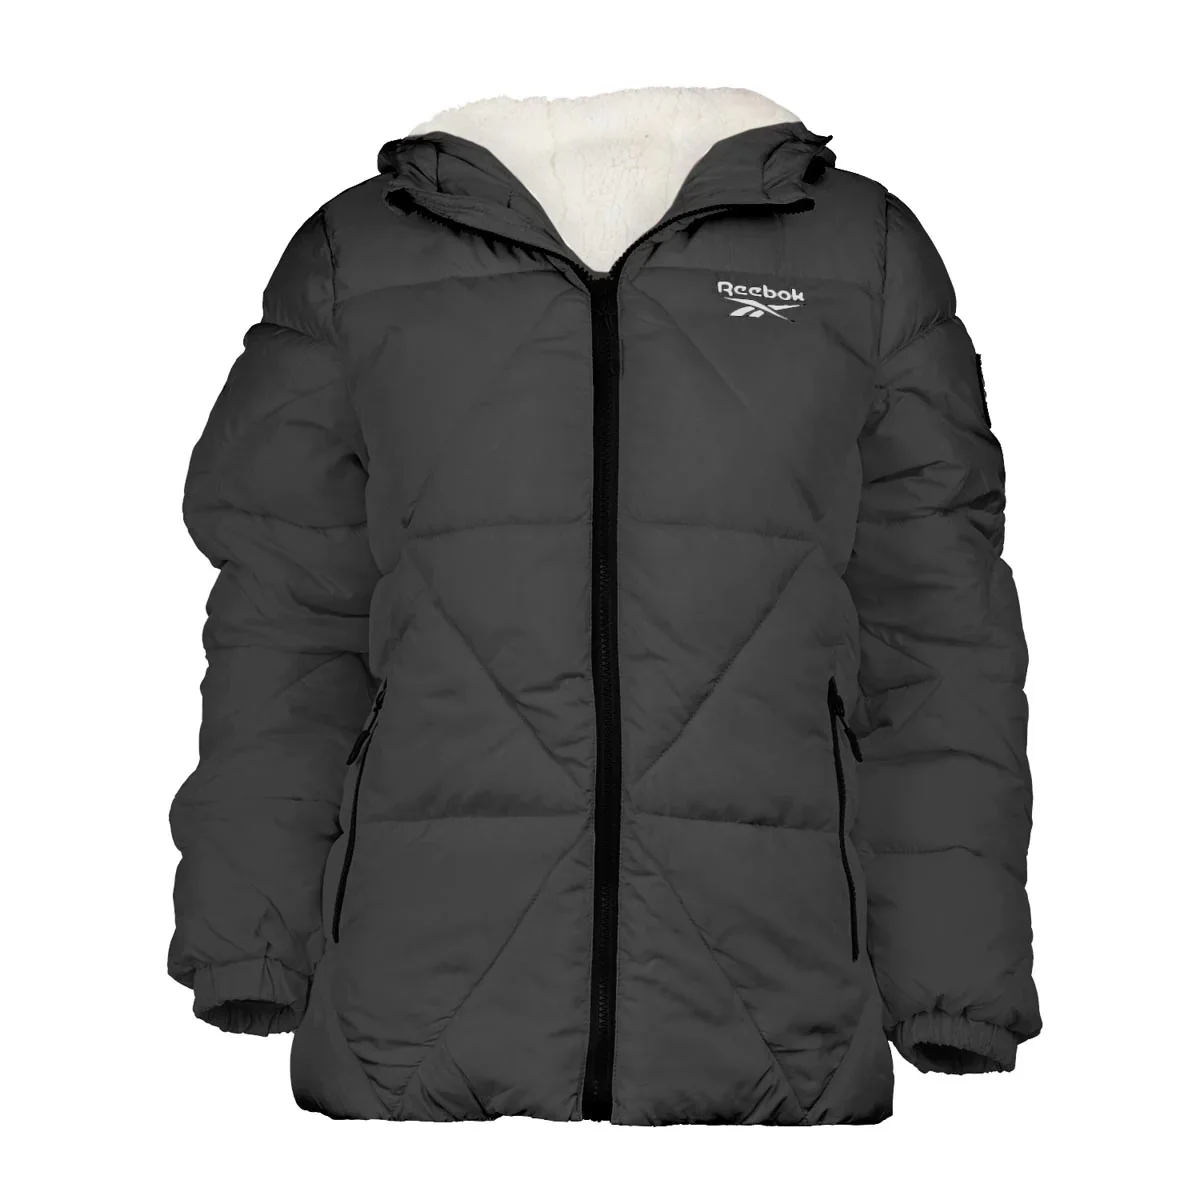 Image of Reebok Women's Puffer Jacket with Sherpa Lining